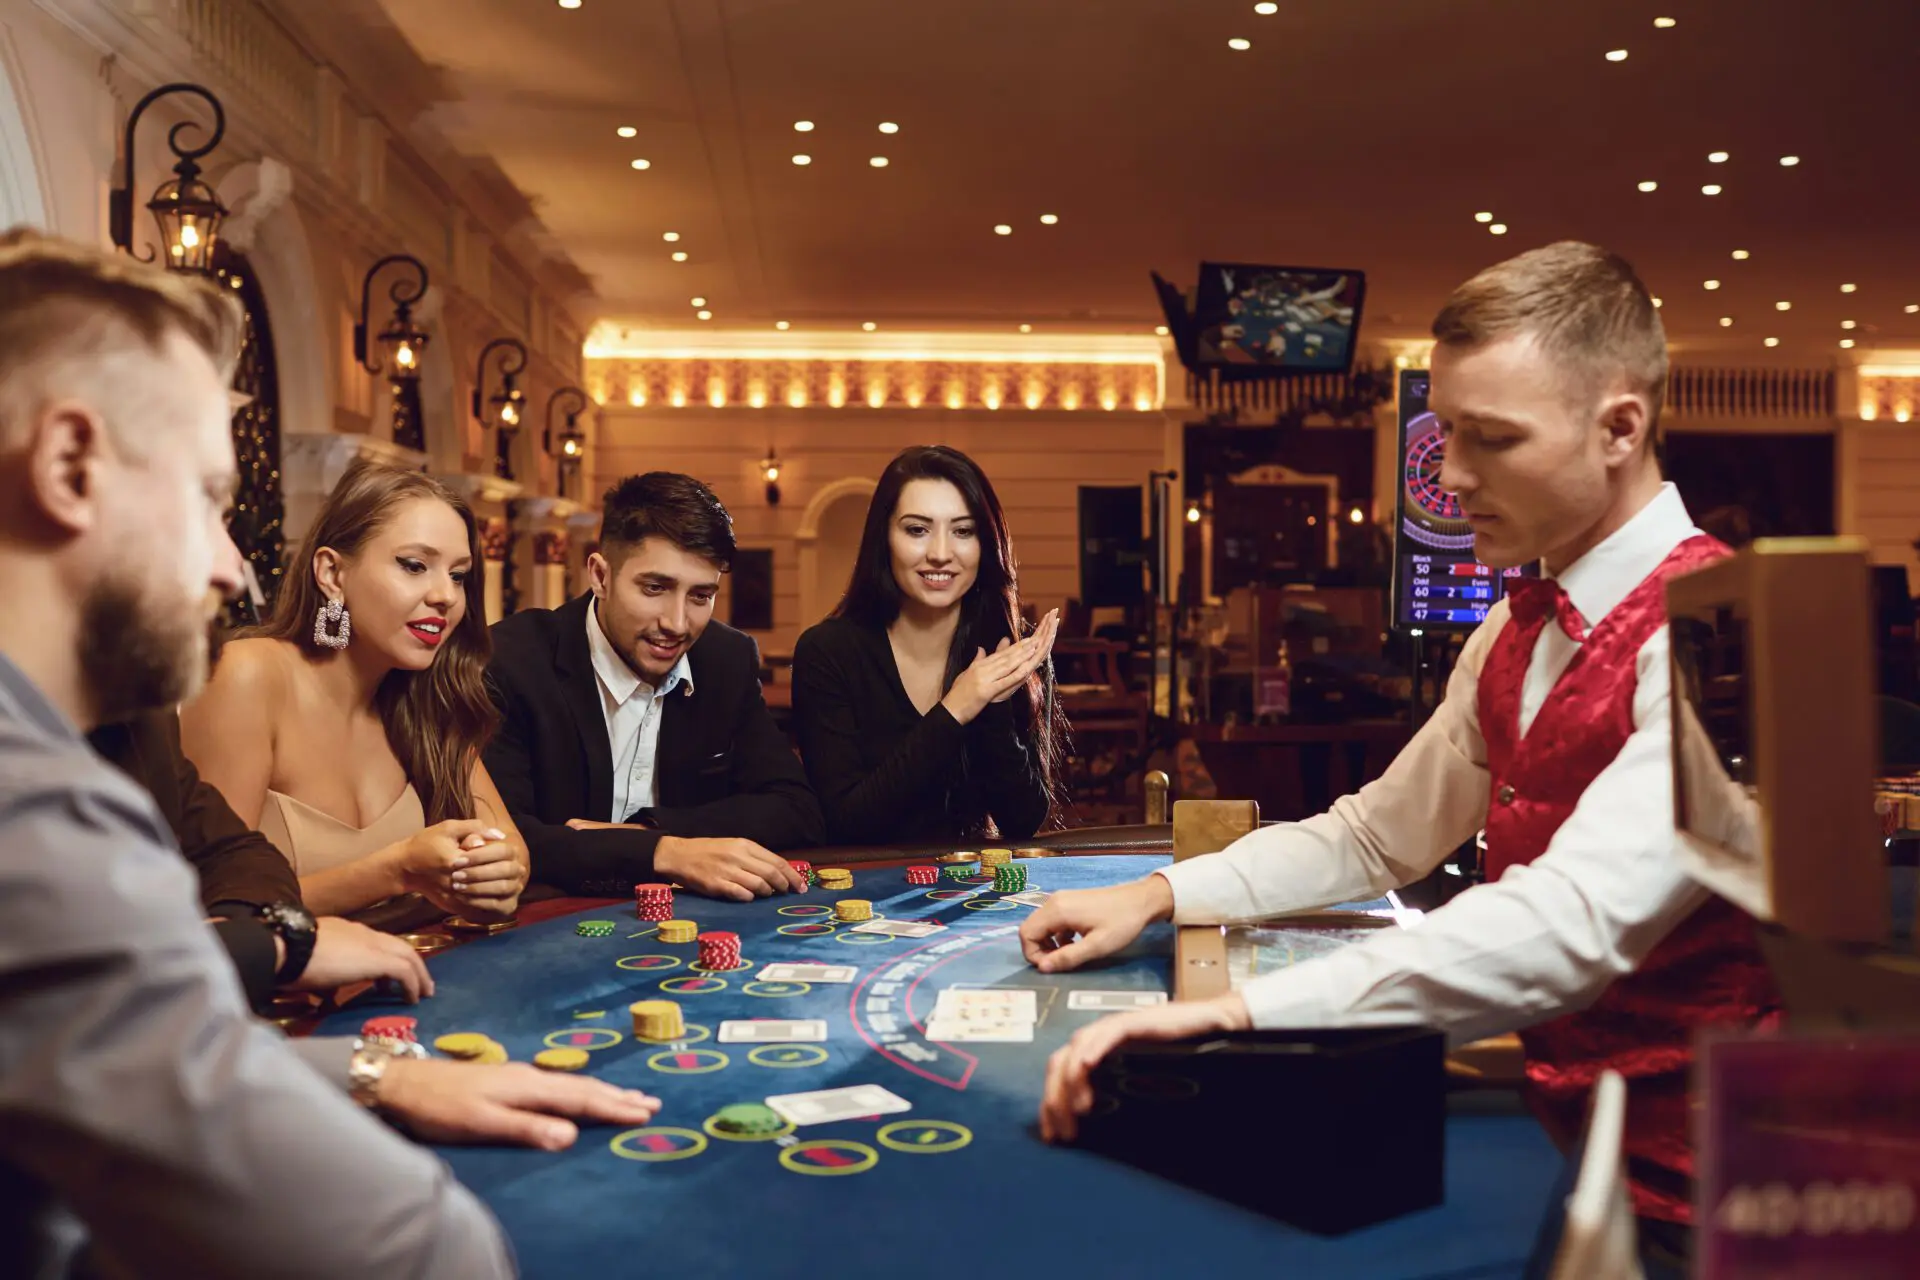 Casino Party spel spelen